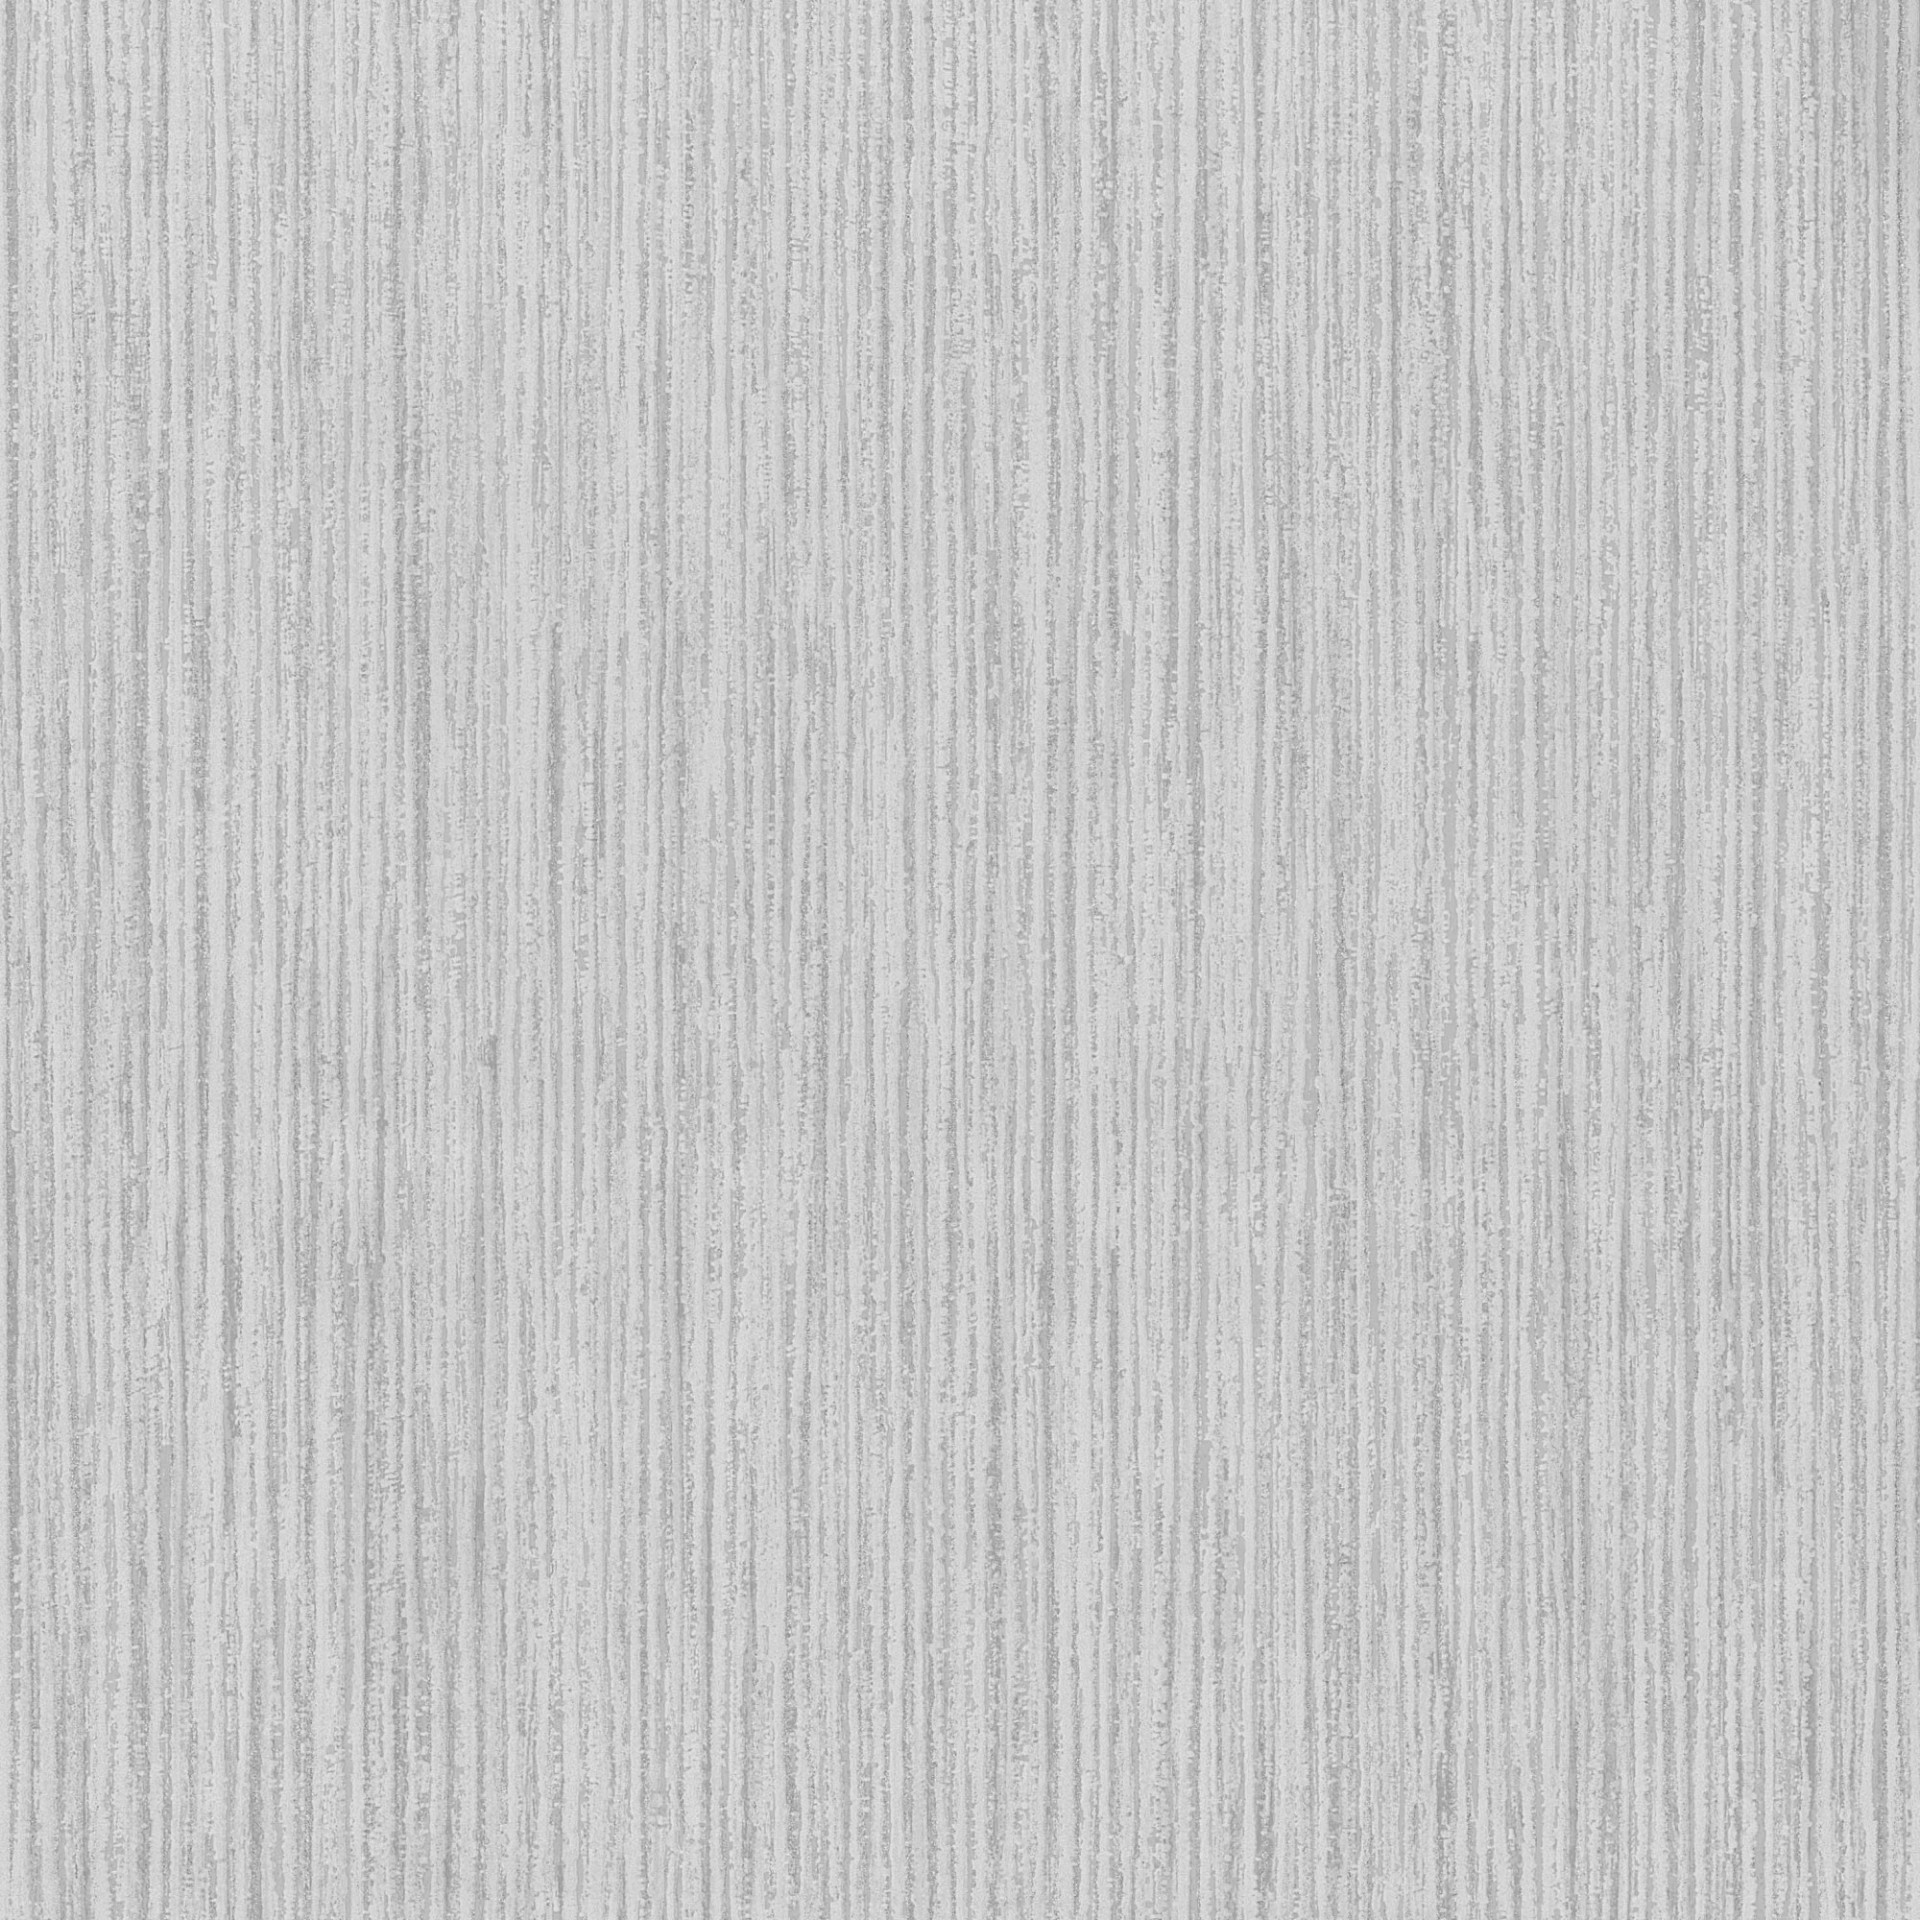 1920x1920 Silver Birch Texture Grey Blown Vinyl Wallpaper by P+S International  13195-50